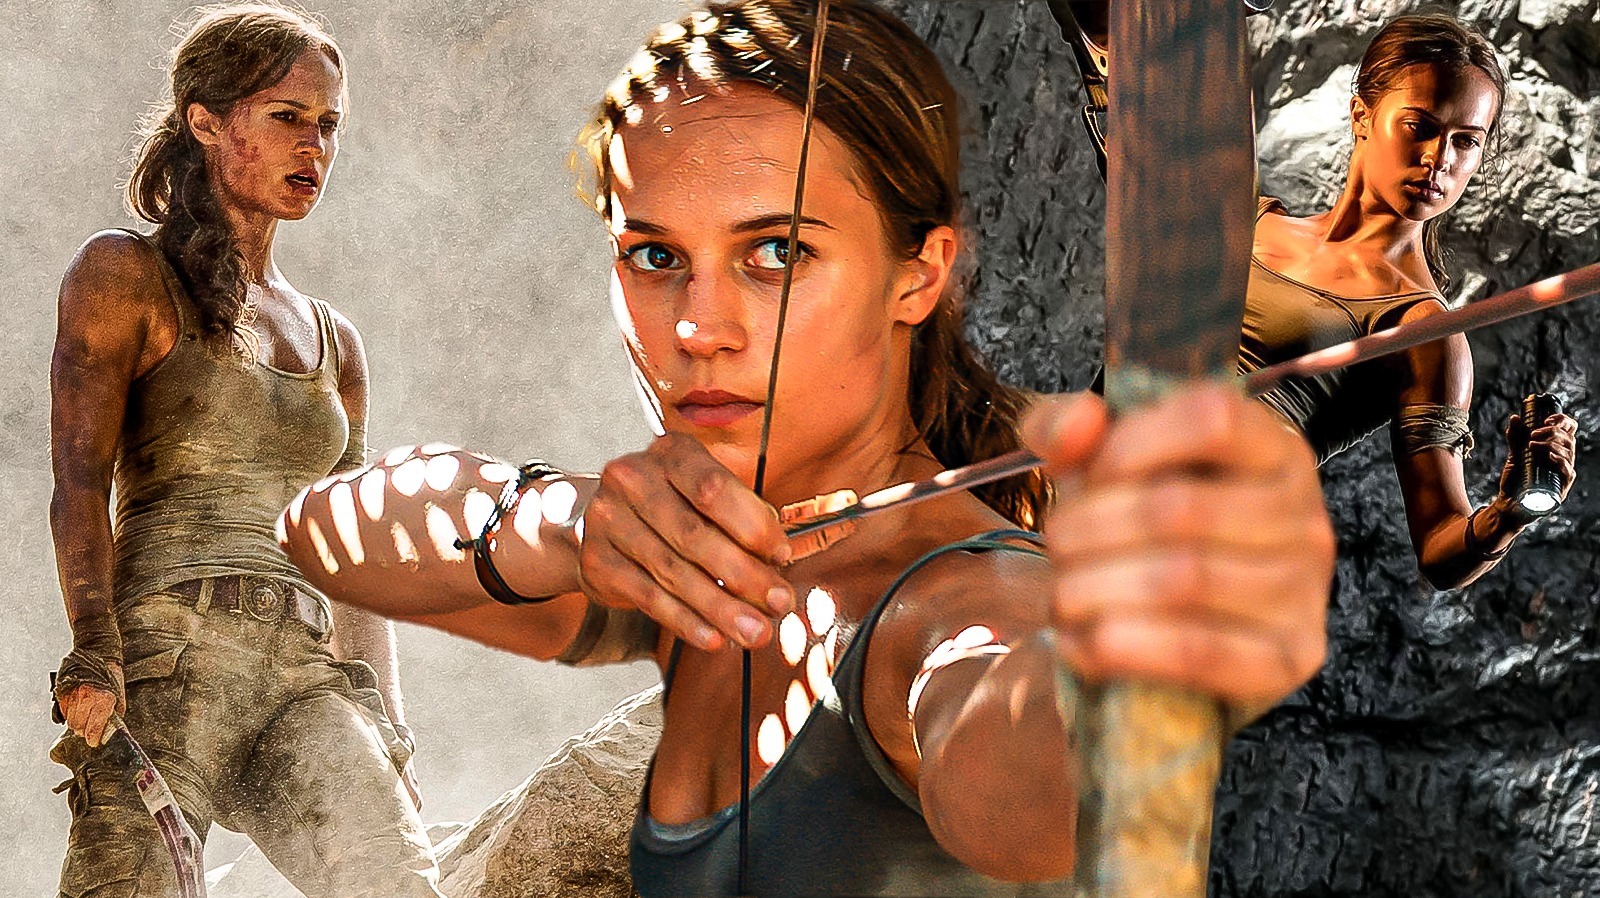 Tomb Raider 2 sets director Ben Wheatley, 2021 release date